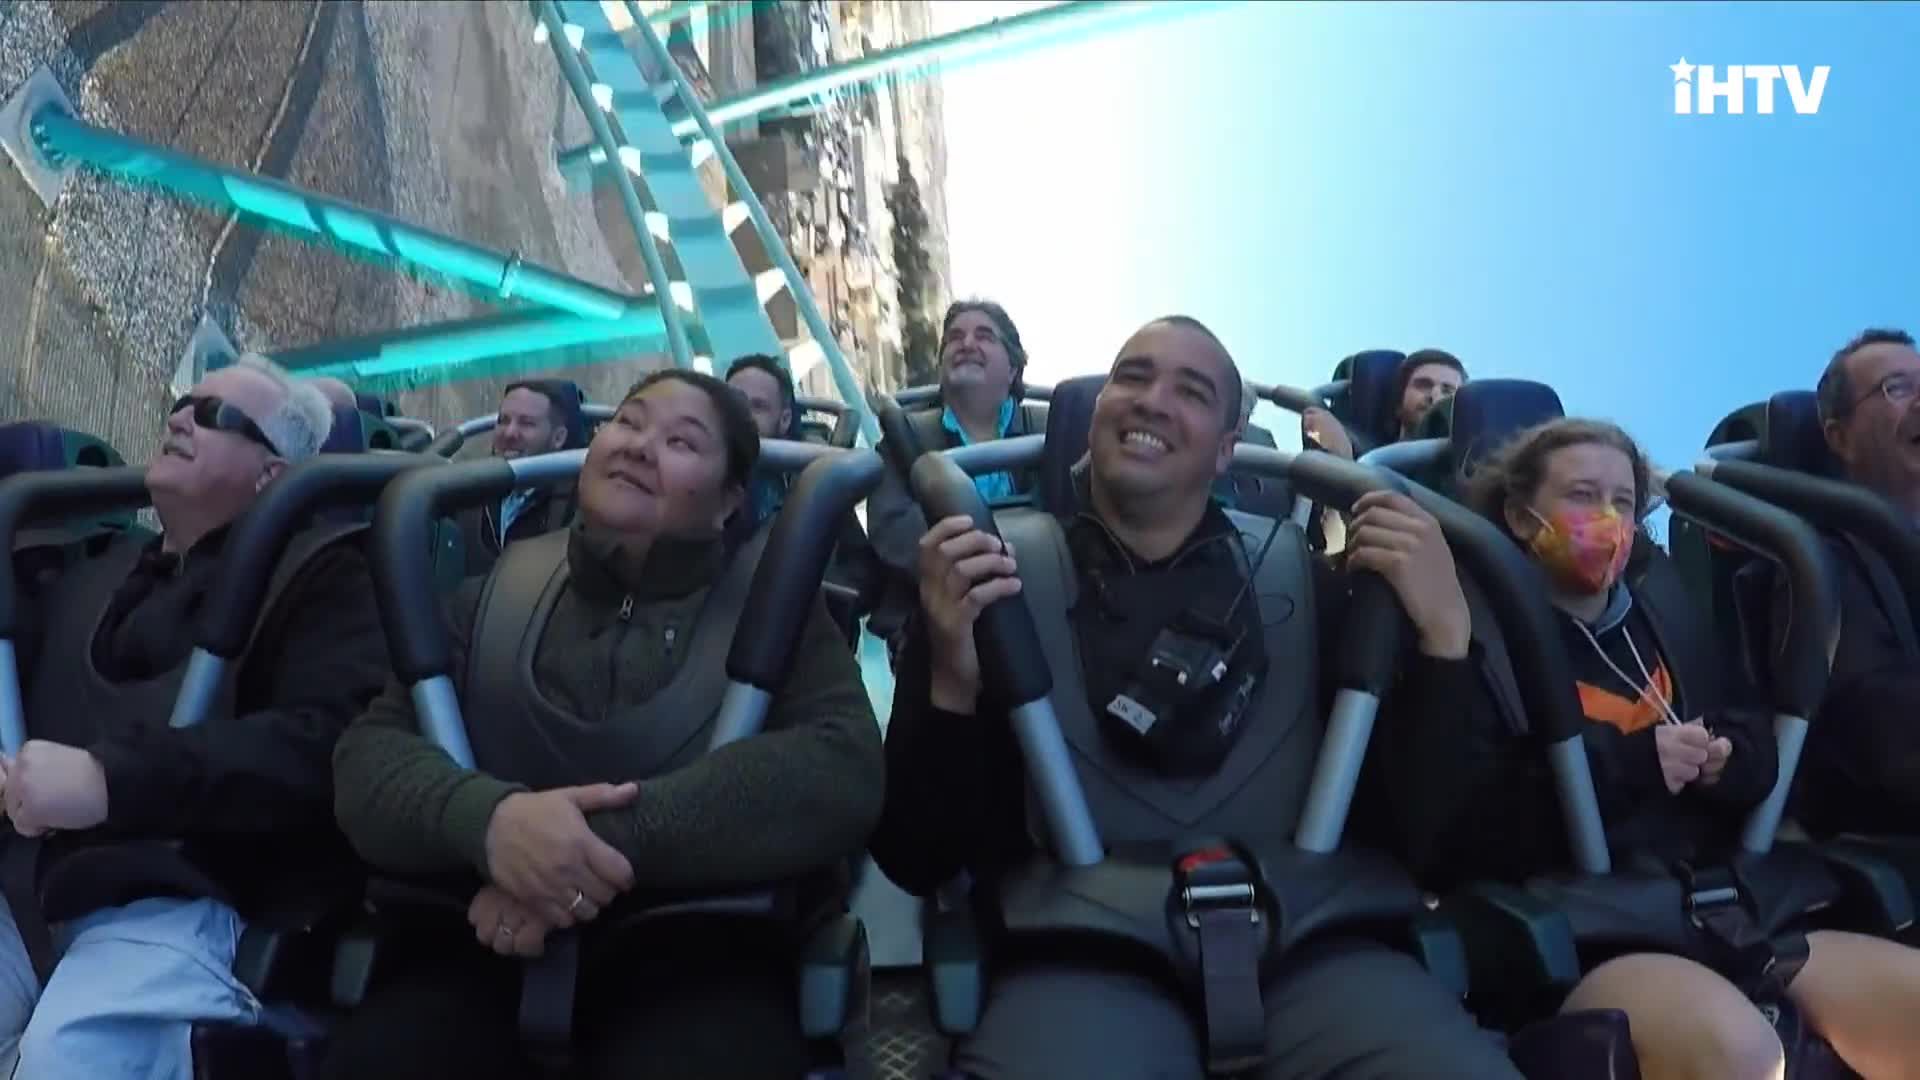 Riding SeaWorld San Diego’s Emperor Roller Coaster LIVE On TV!